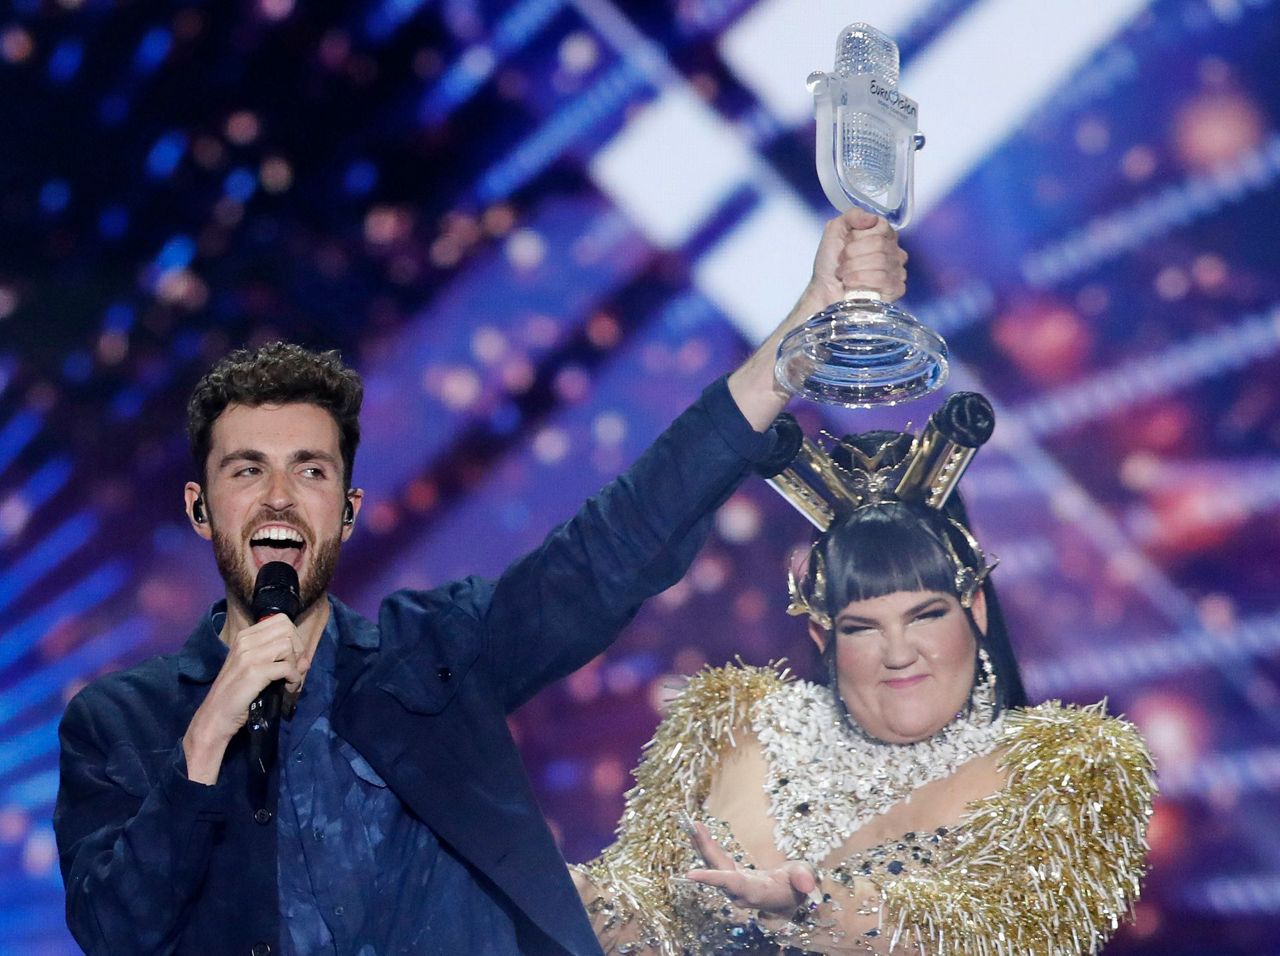 Eurovision Song Contest Grand Final kicks off in Tel Aviv